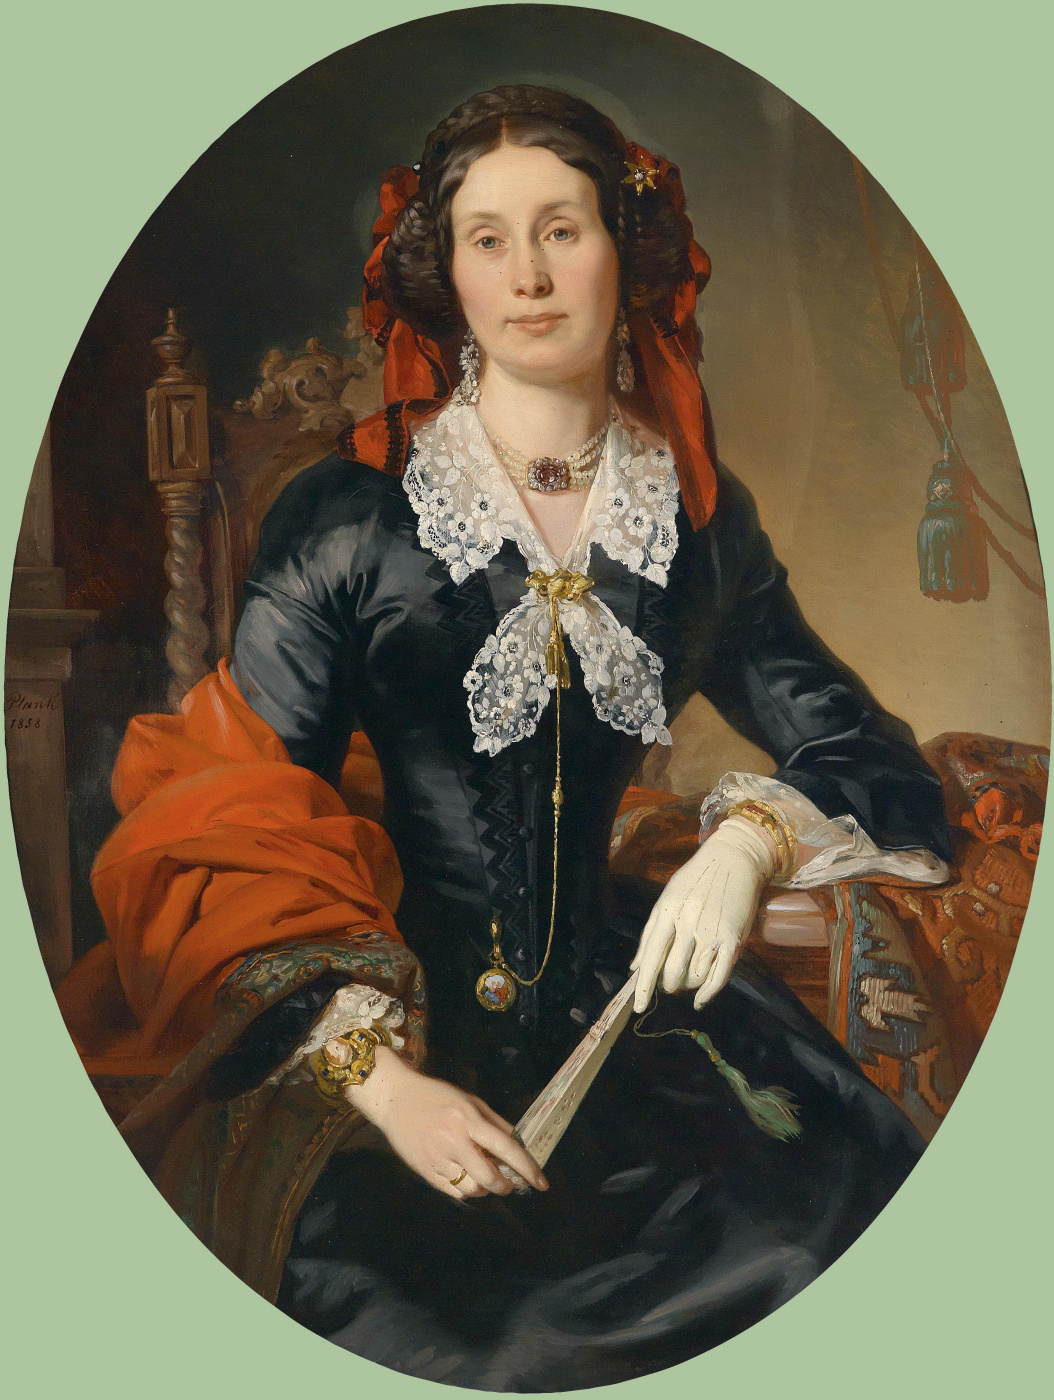 Josef Plank. Portrait of Anna Reitter, nee Lorenz with Red Shawl